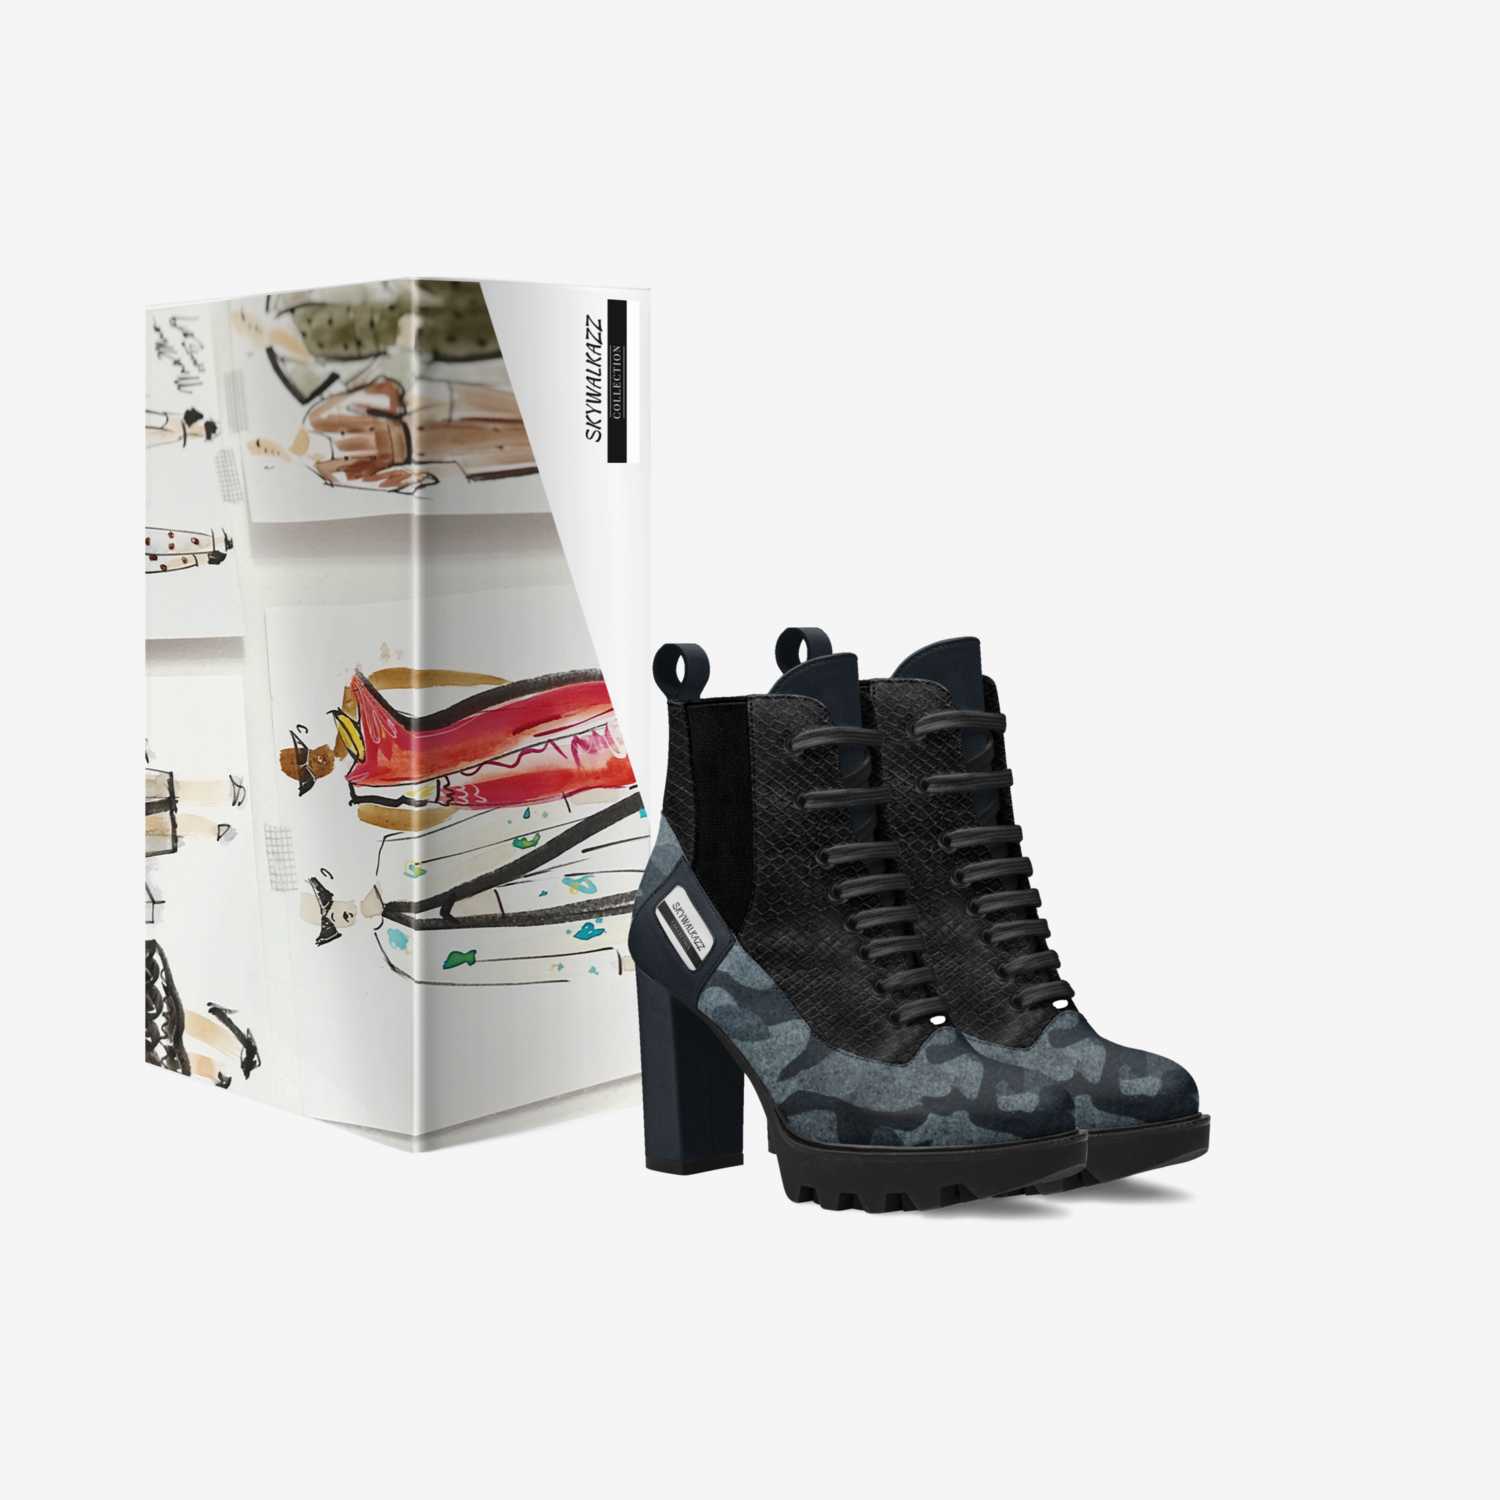 Bozz custom made in Italy shoes by Cordarius Gatlin | Box view